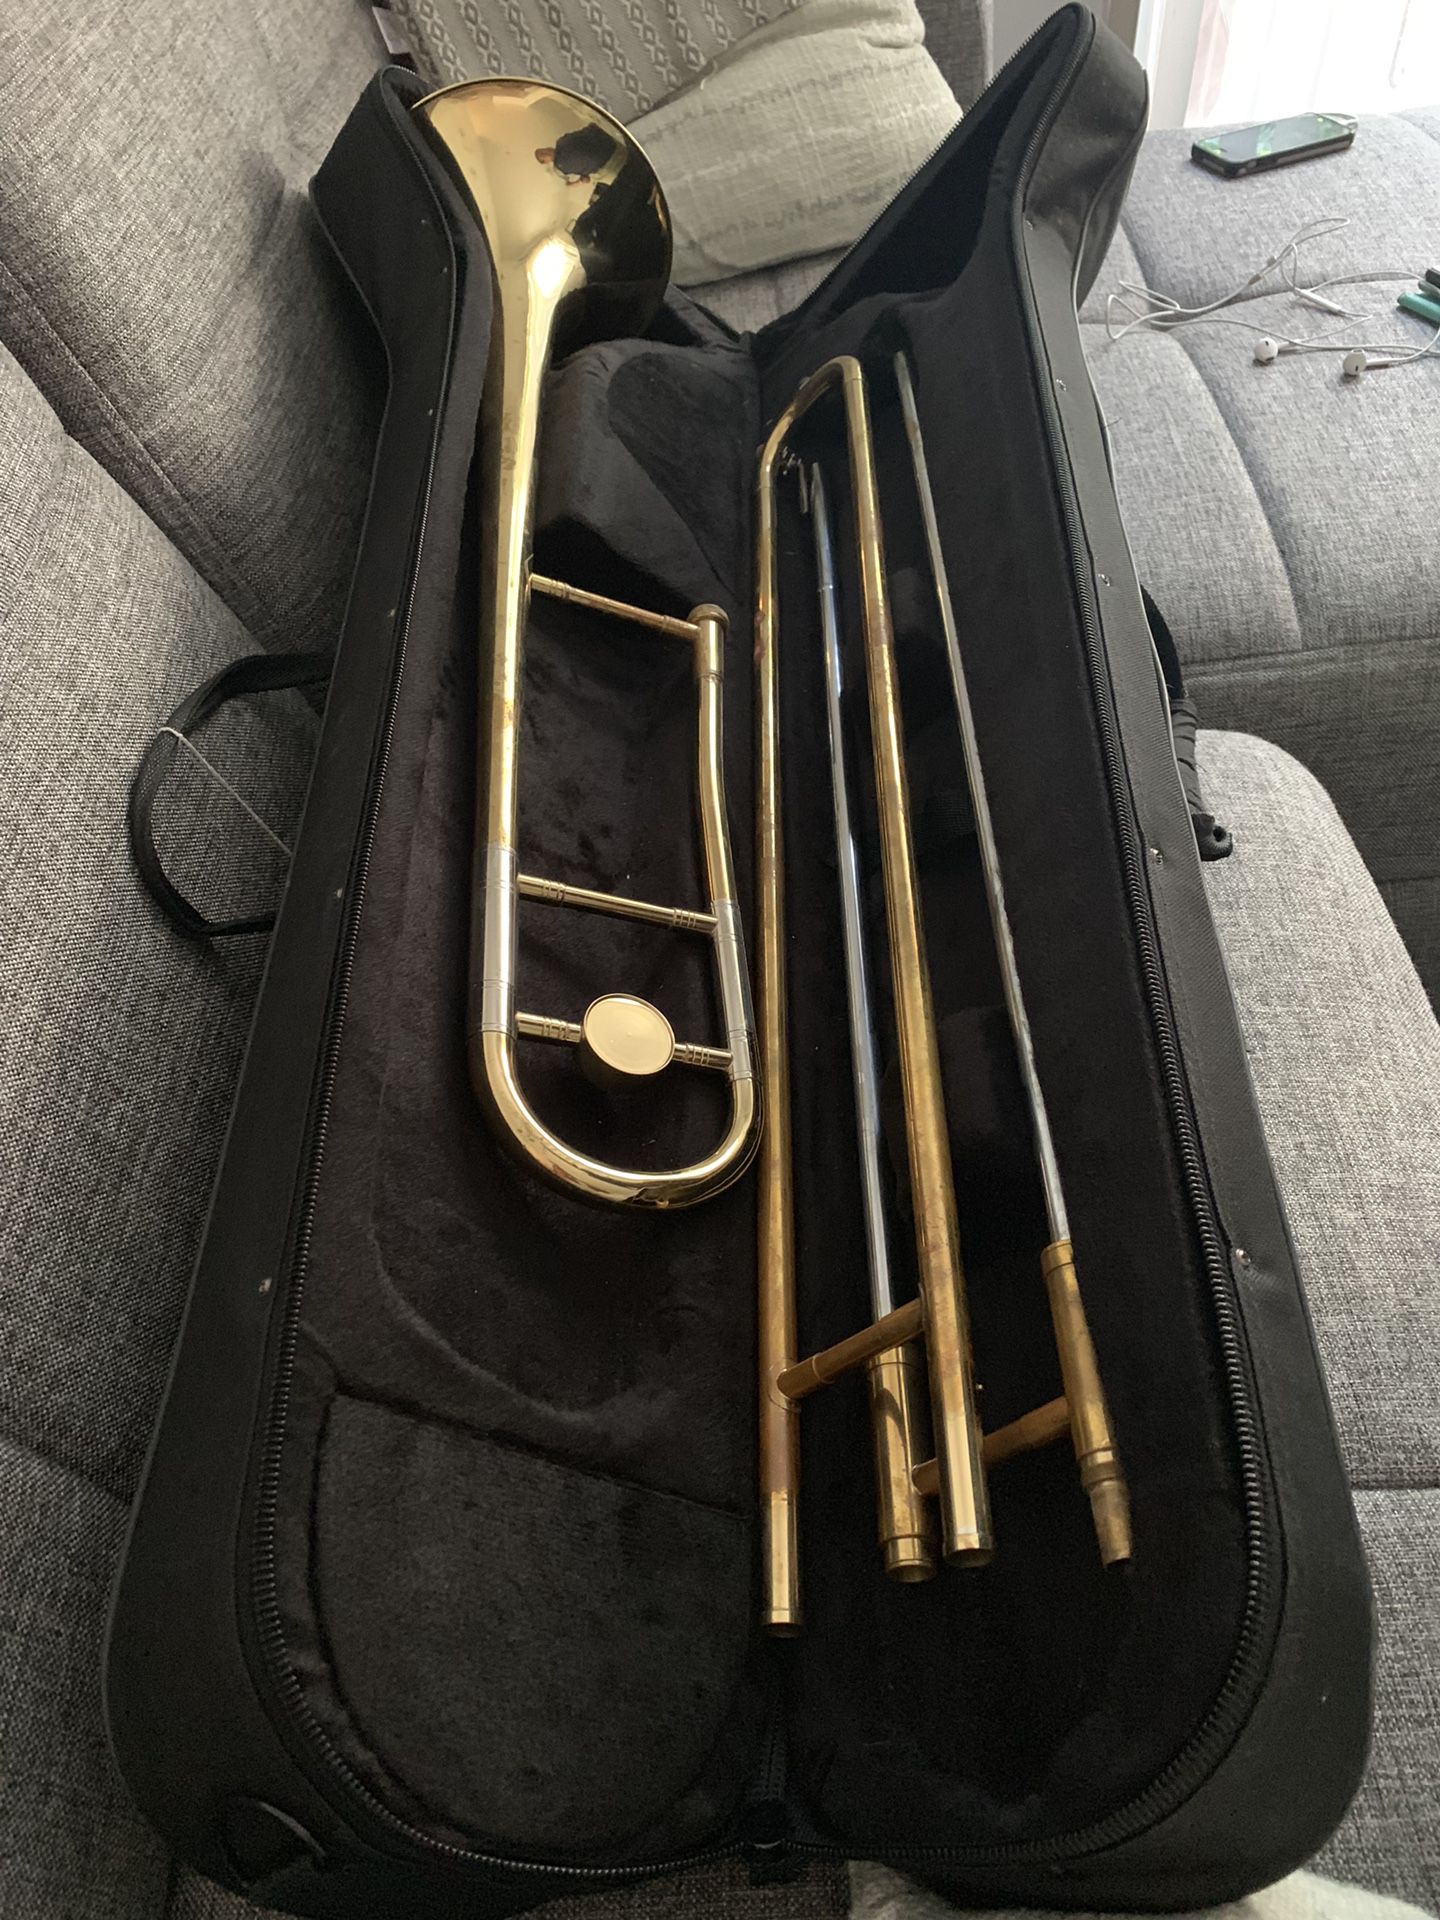 Trombone with case